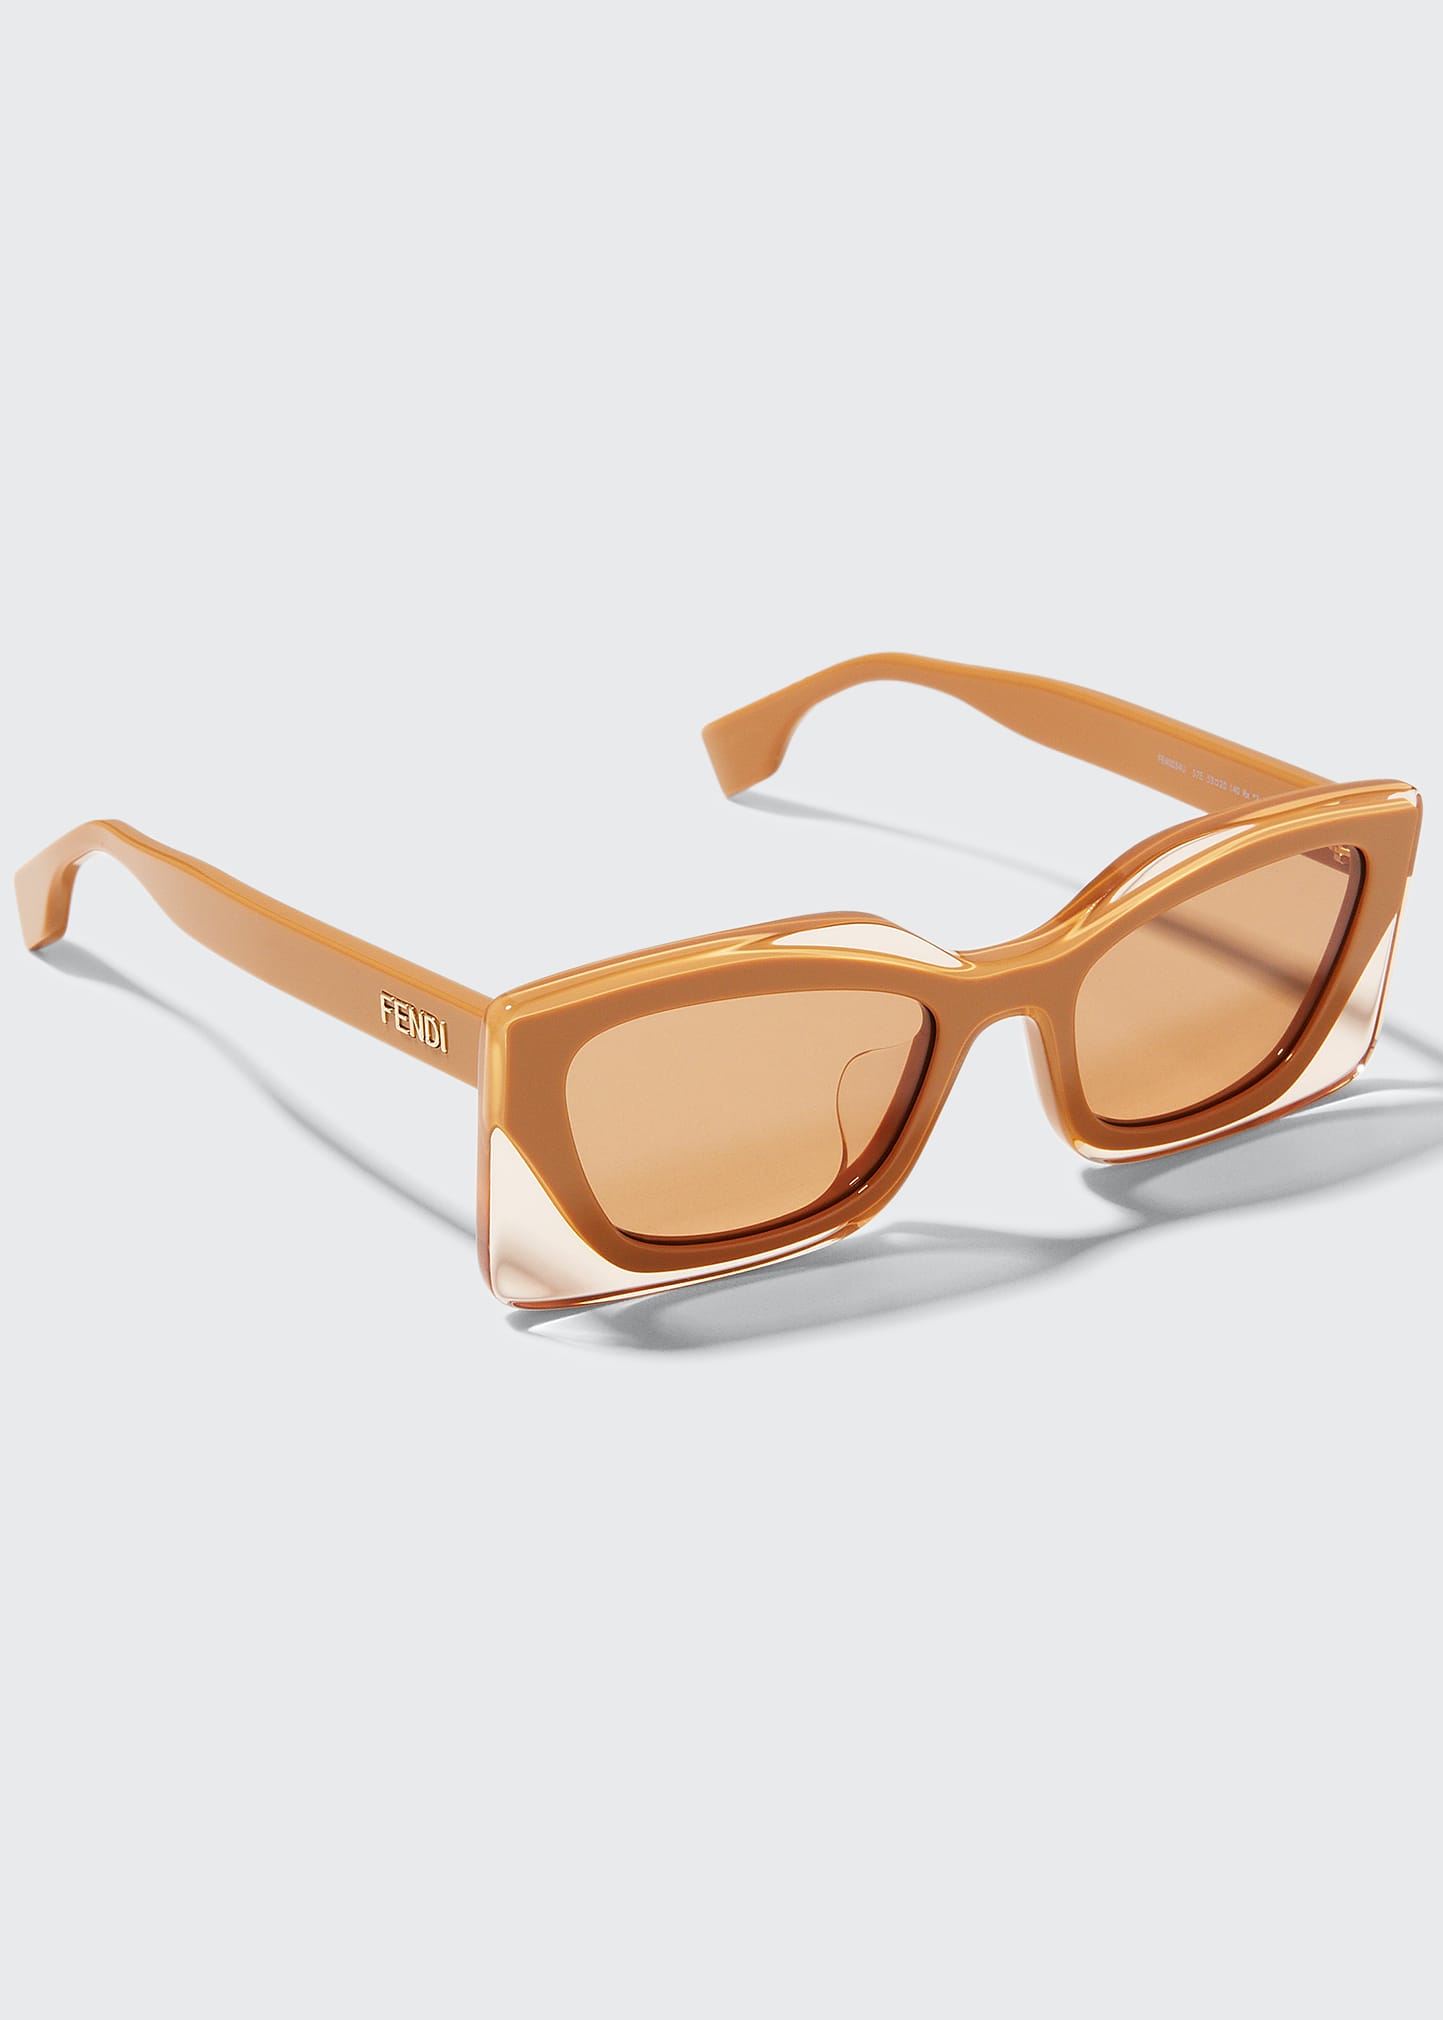 Fendi Clear Rectangle Acetate Sunglasses